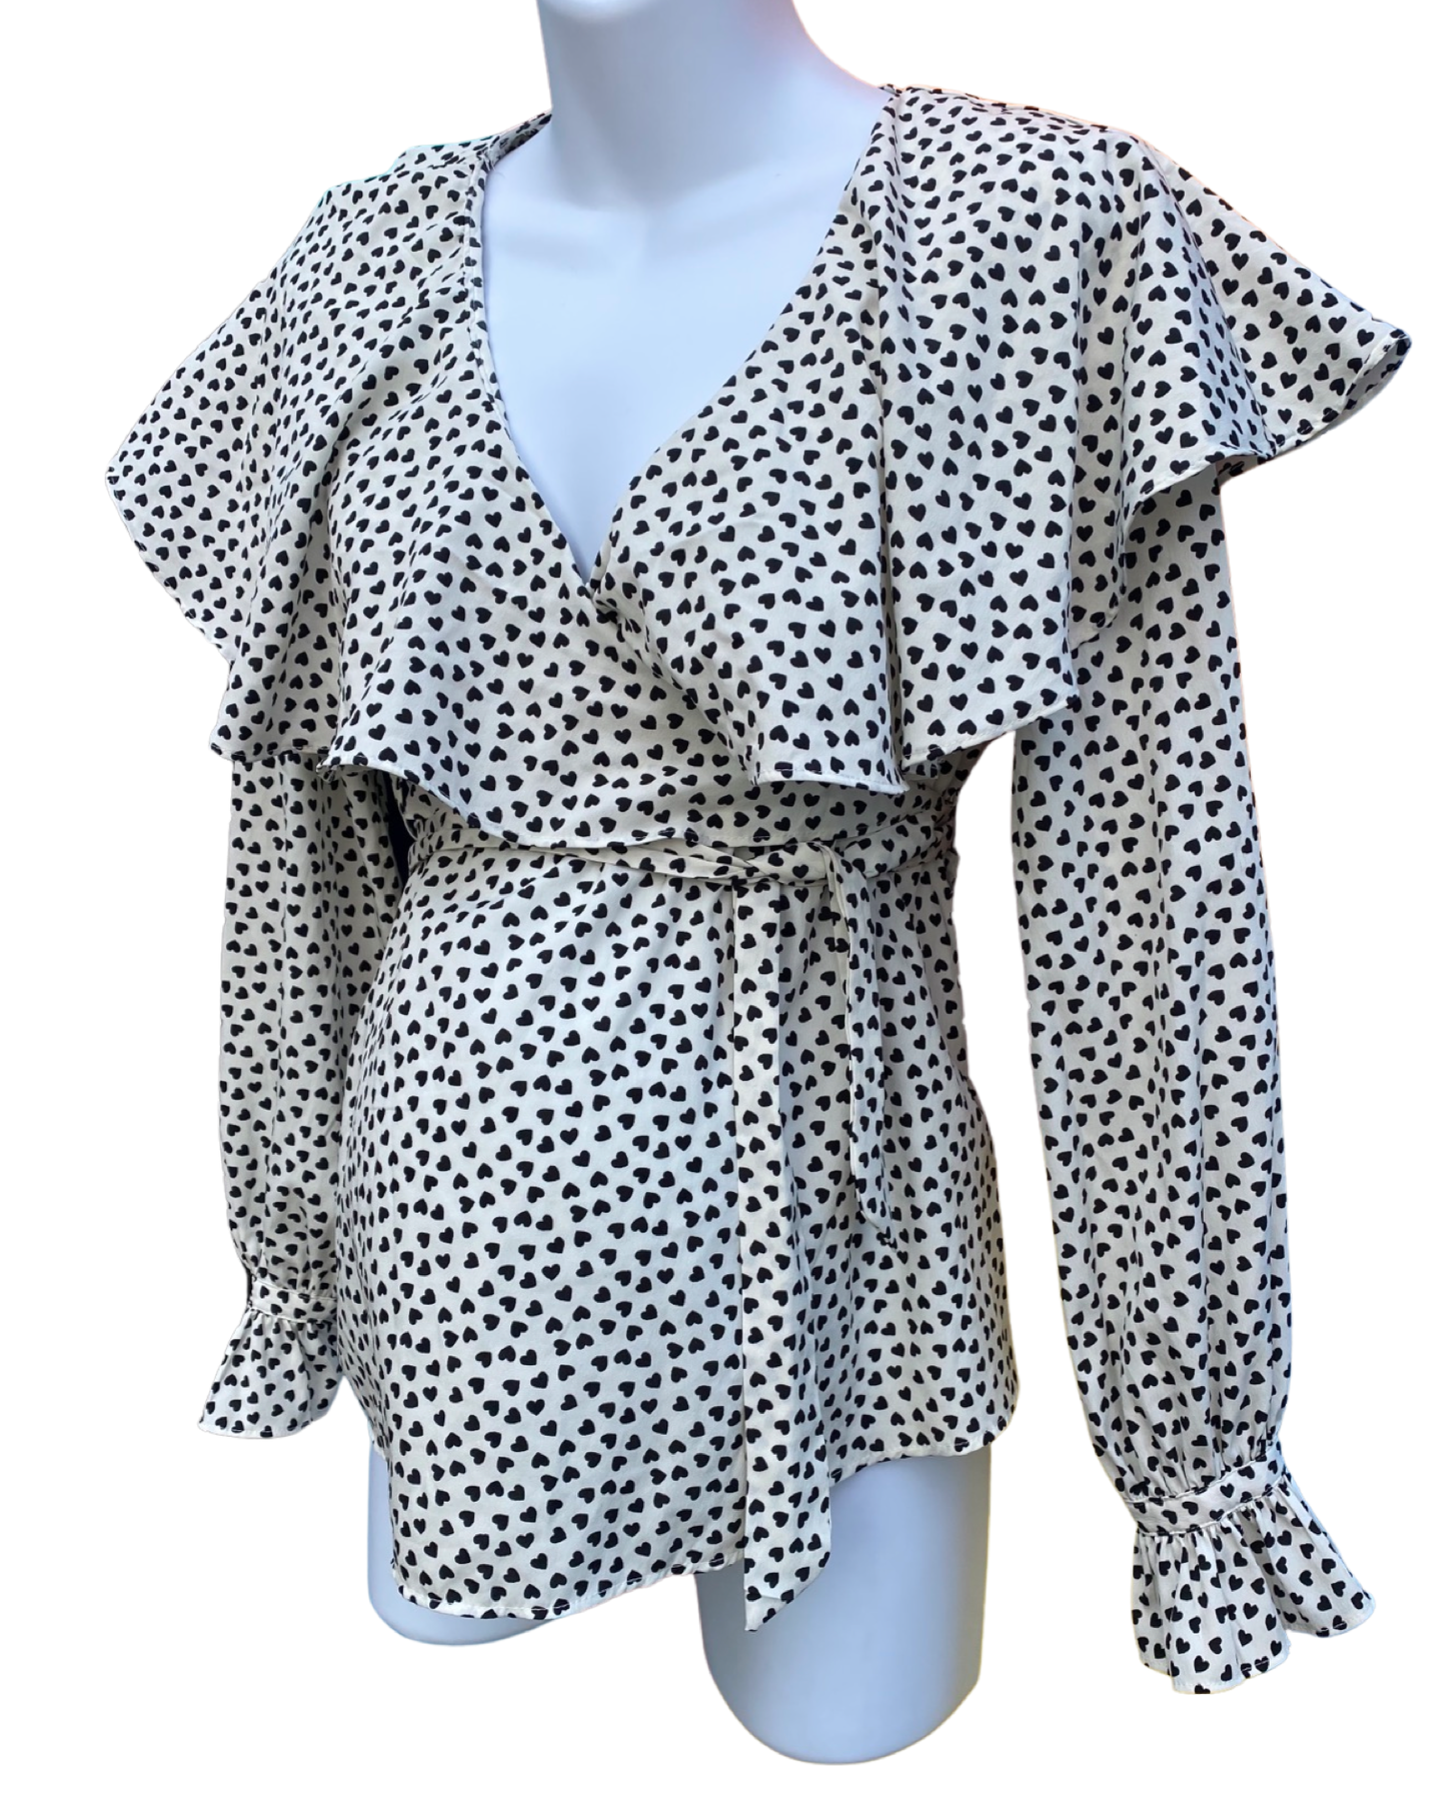 Topshop maternity heart print blouse (size 8)